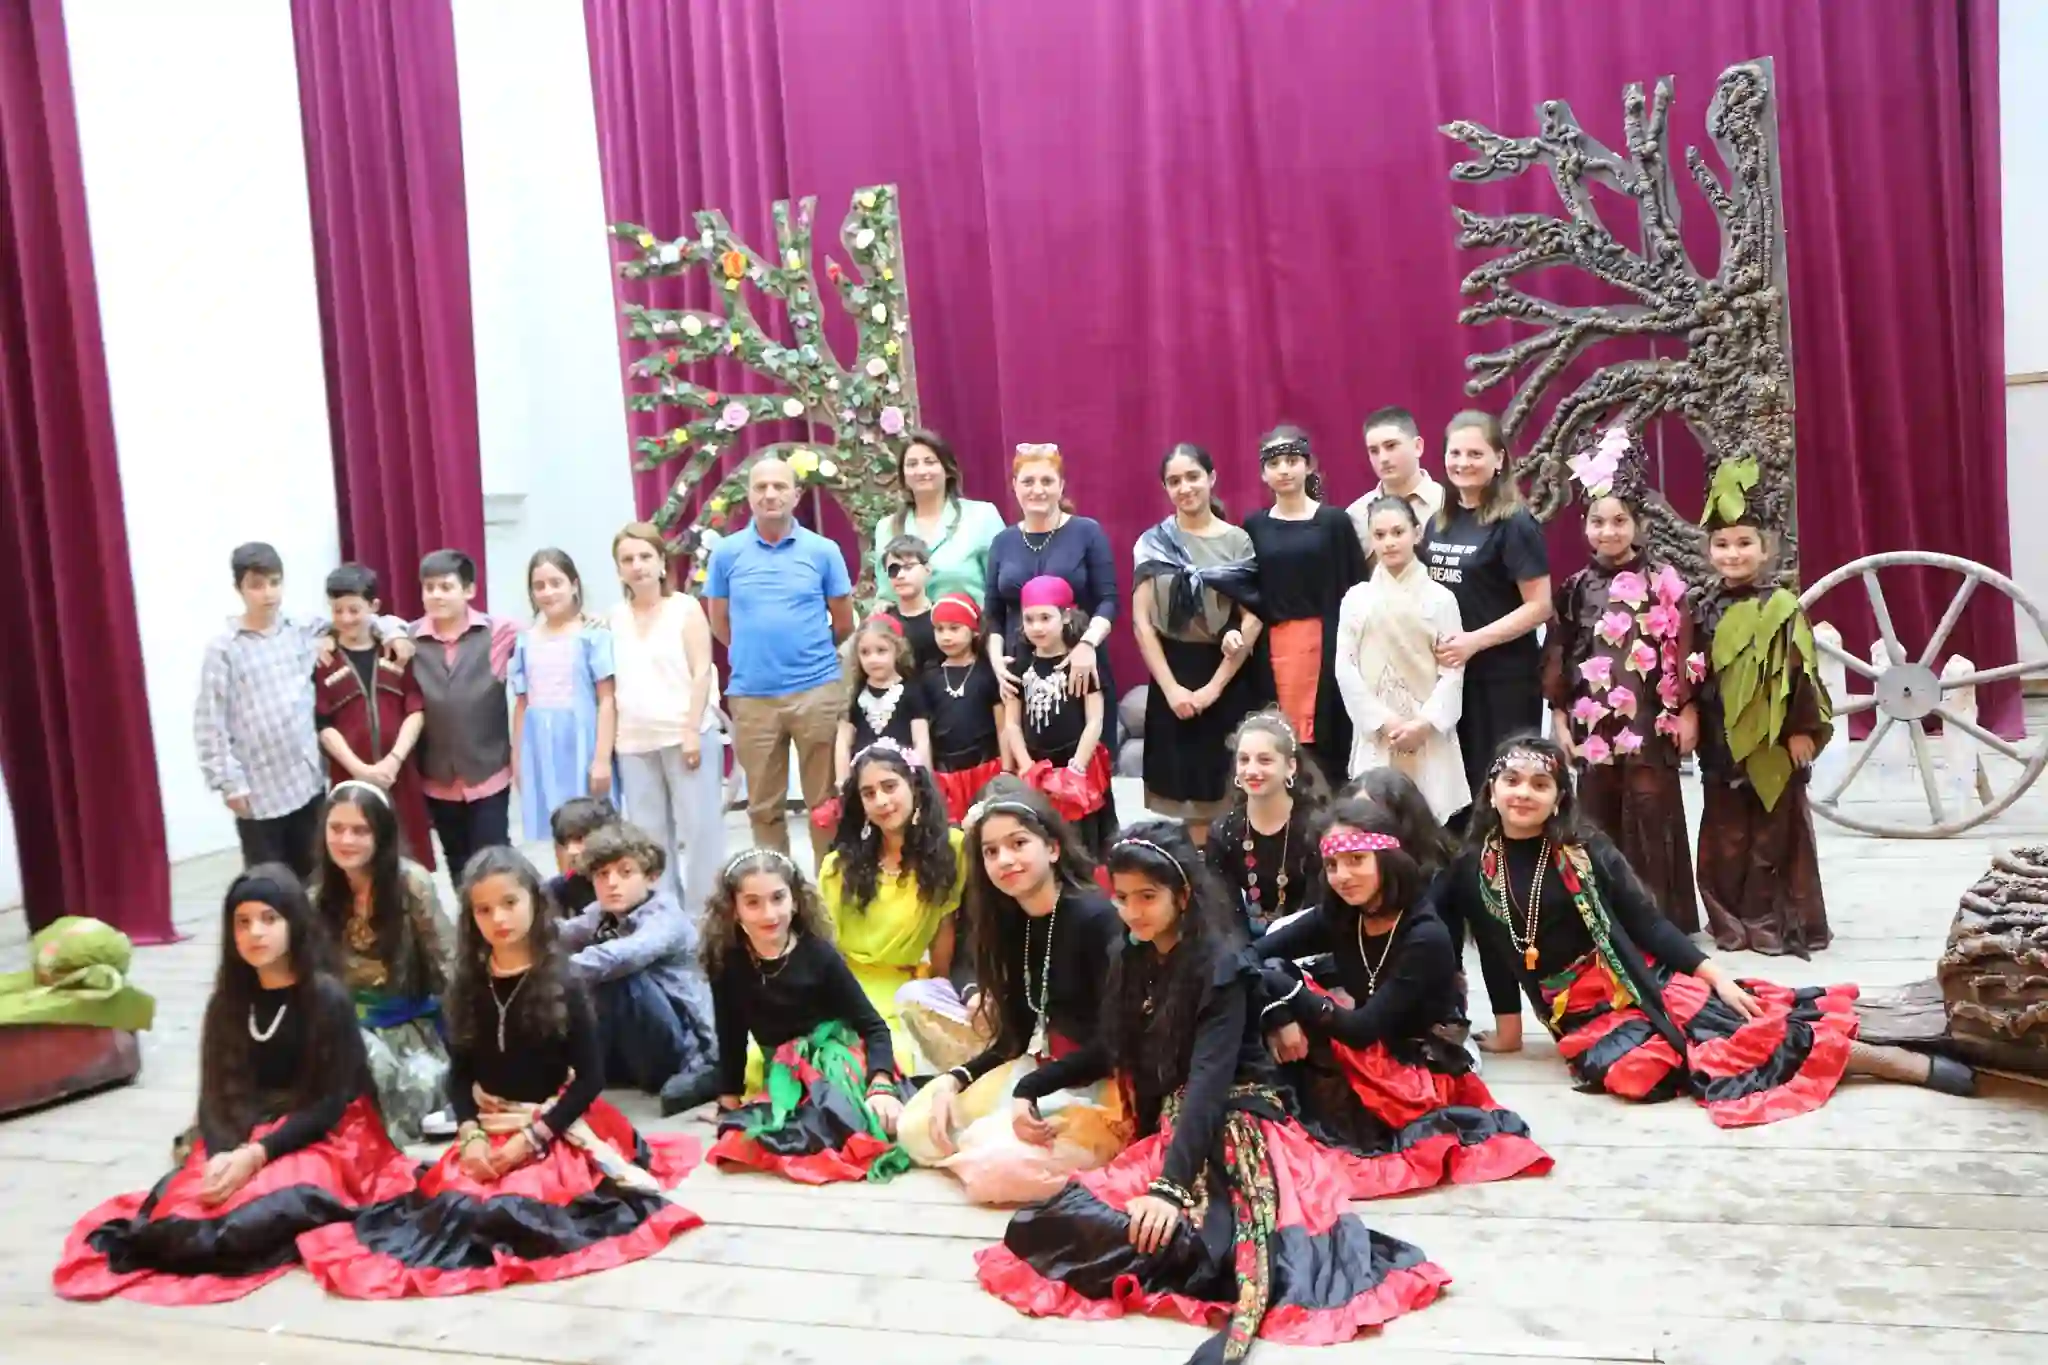 Keda: Special children's festival held at a culture center credit: Facebook/keda municipality